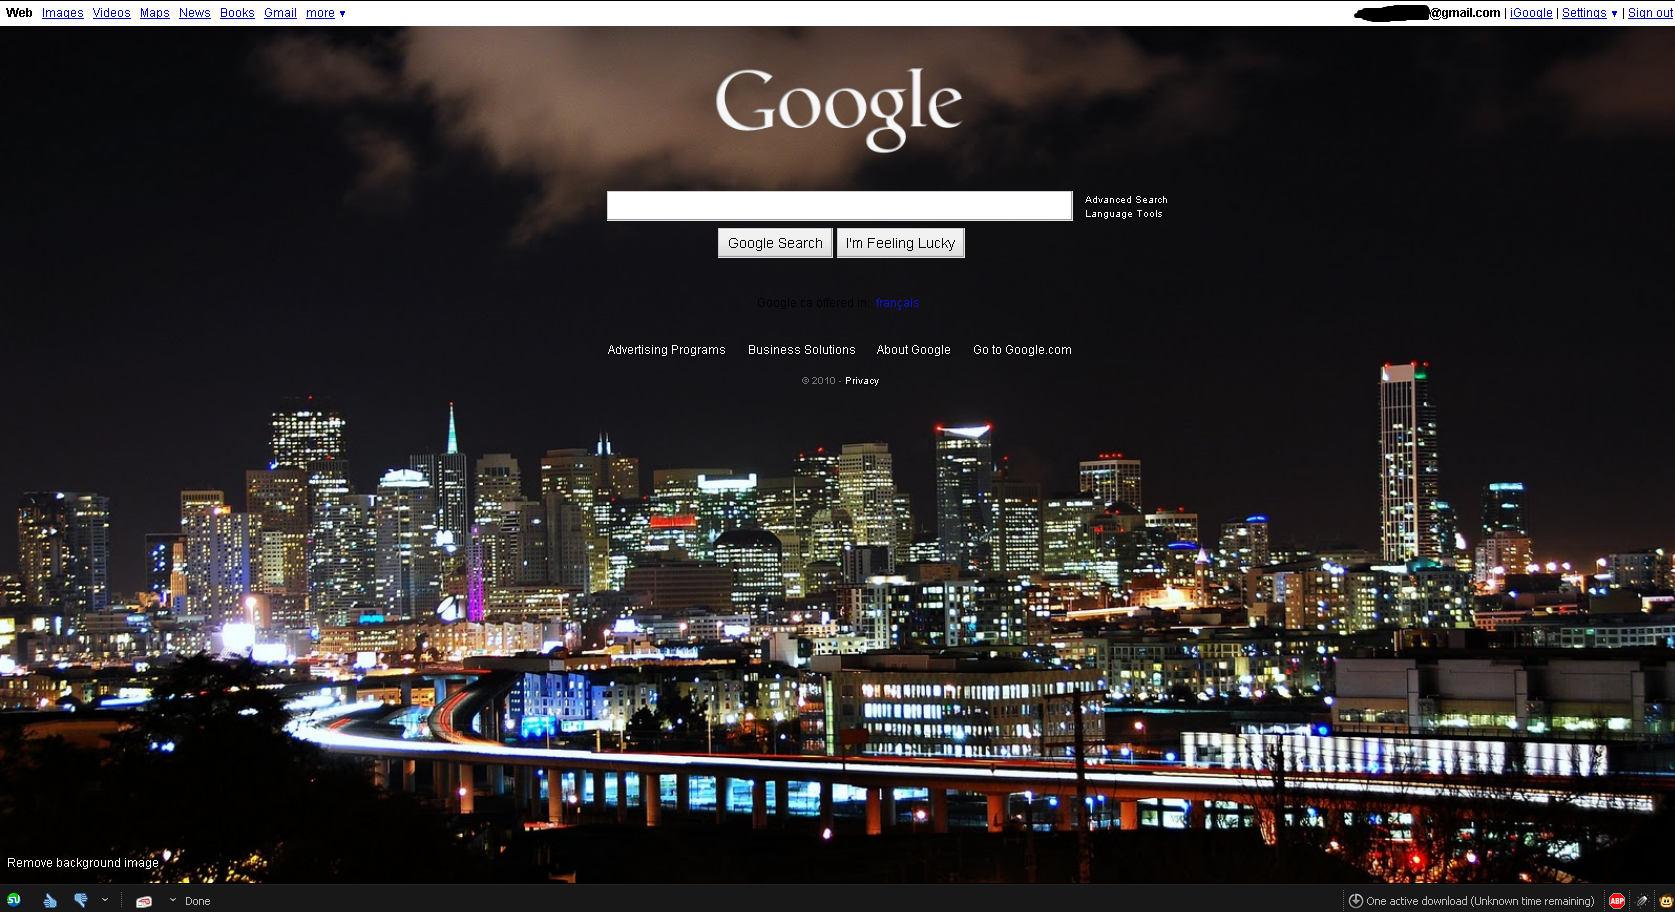 Google Homepage Backgrounds - Potrero Hill - 1675x912 Wallpaper 